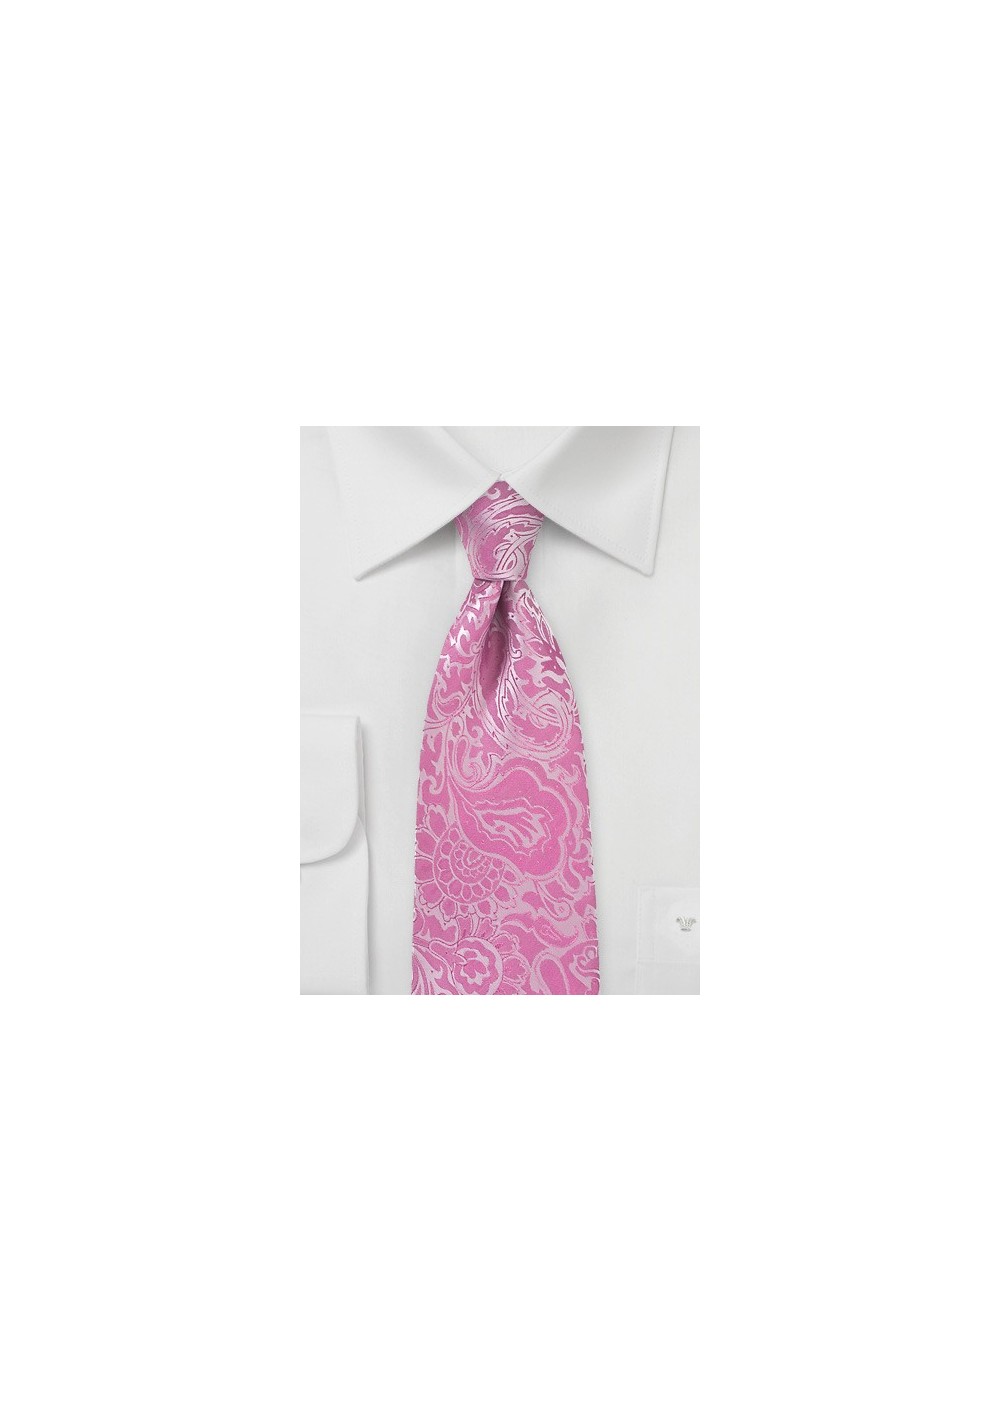 Paisley Summer Tie in Bright Azalea Pink